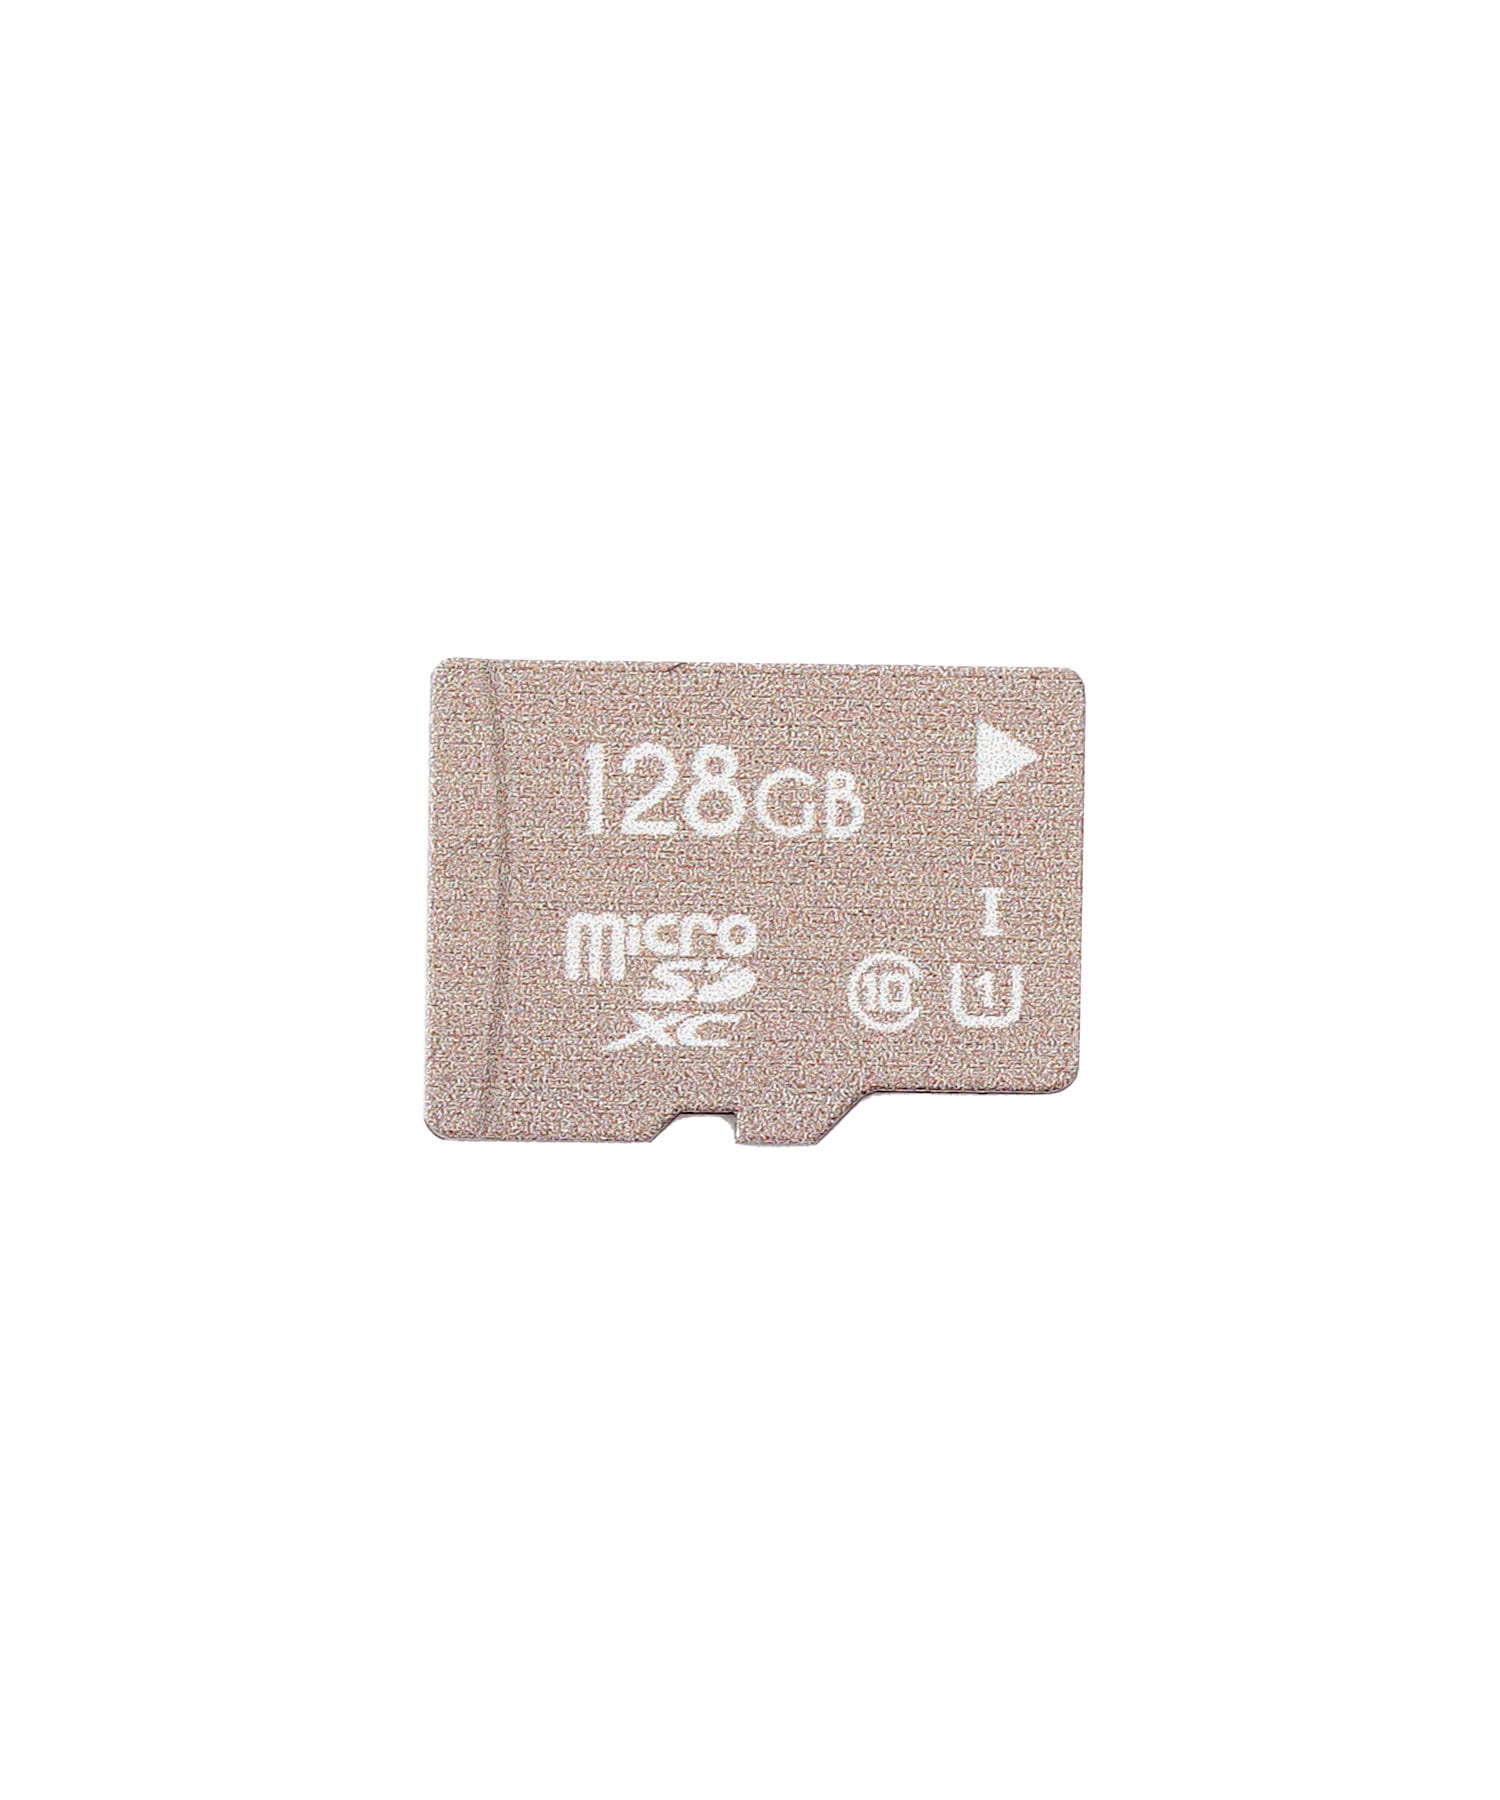 3COINS(スリーコインズ) microSDカード128G